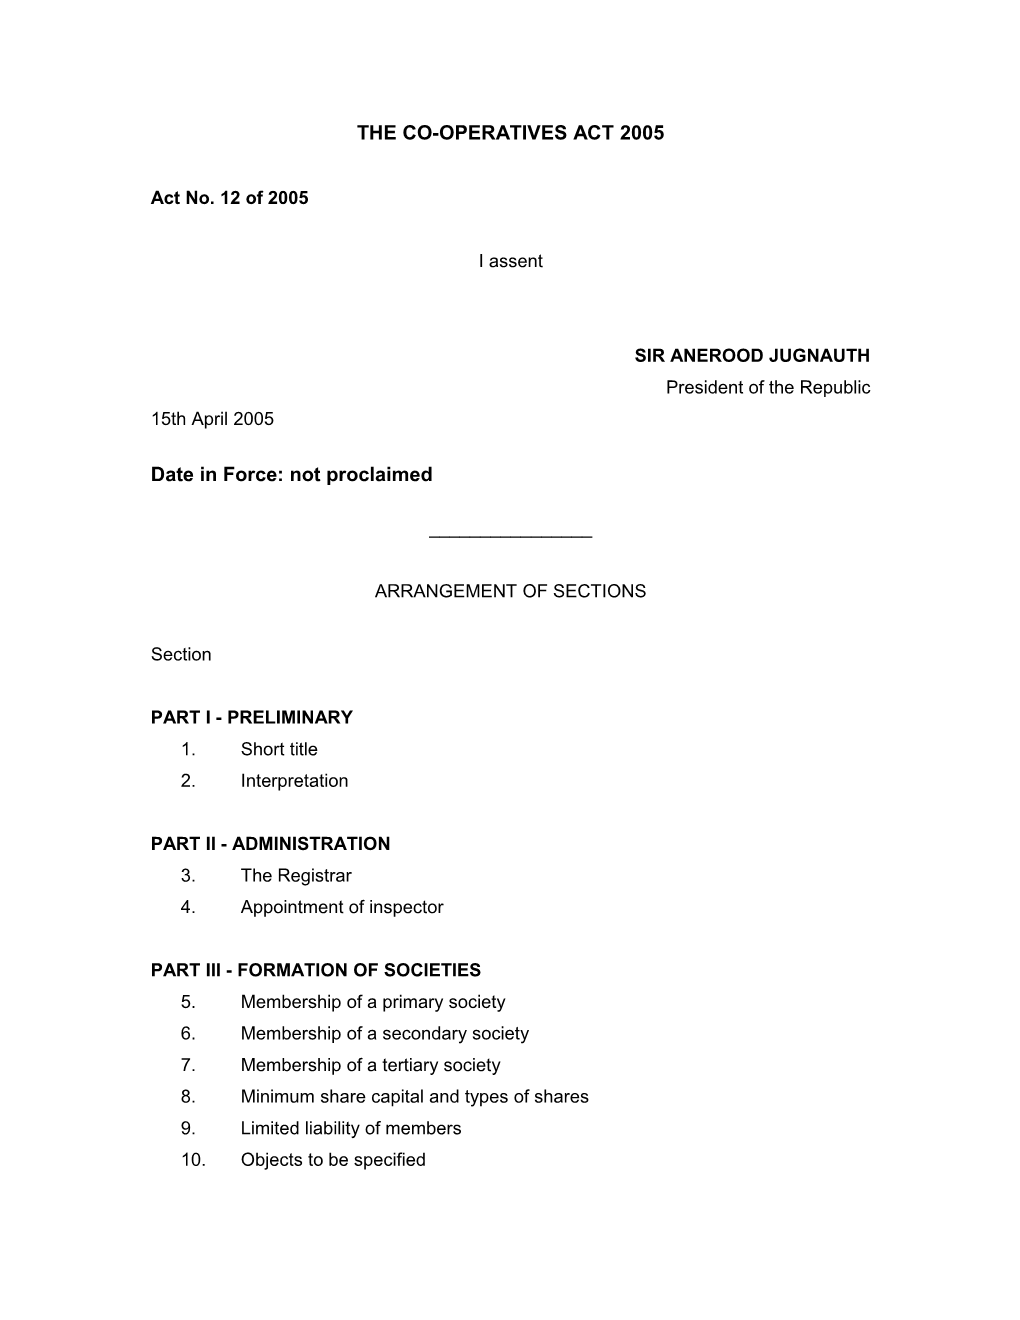 The Co-Operatives Bill 2005L